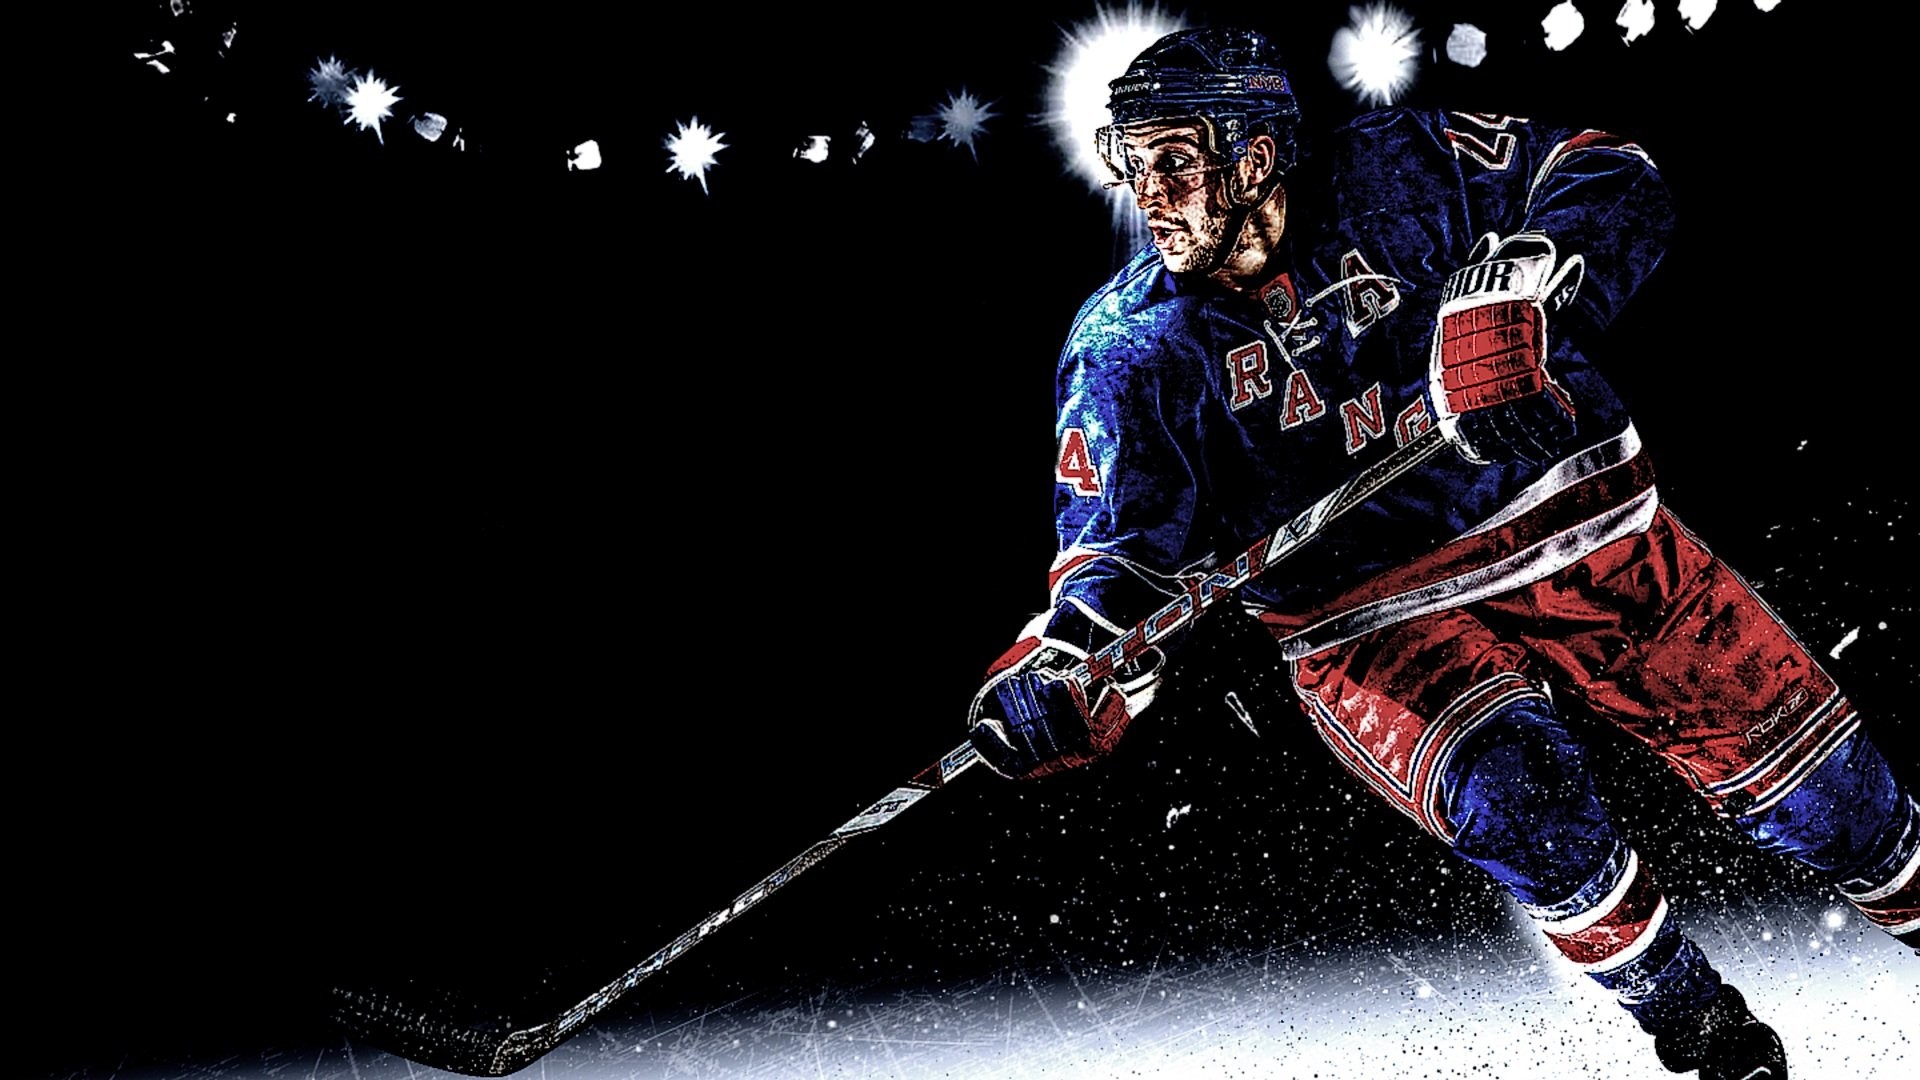 1920x1080 NHL New York Rangers Hockey Player Henrik Ludqvist wallpaper HD ... |  Download Wallpaper | Pinterest | Rangers hockey, Hockey and Henrik lundqvist